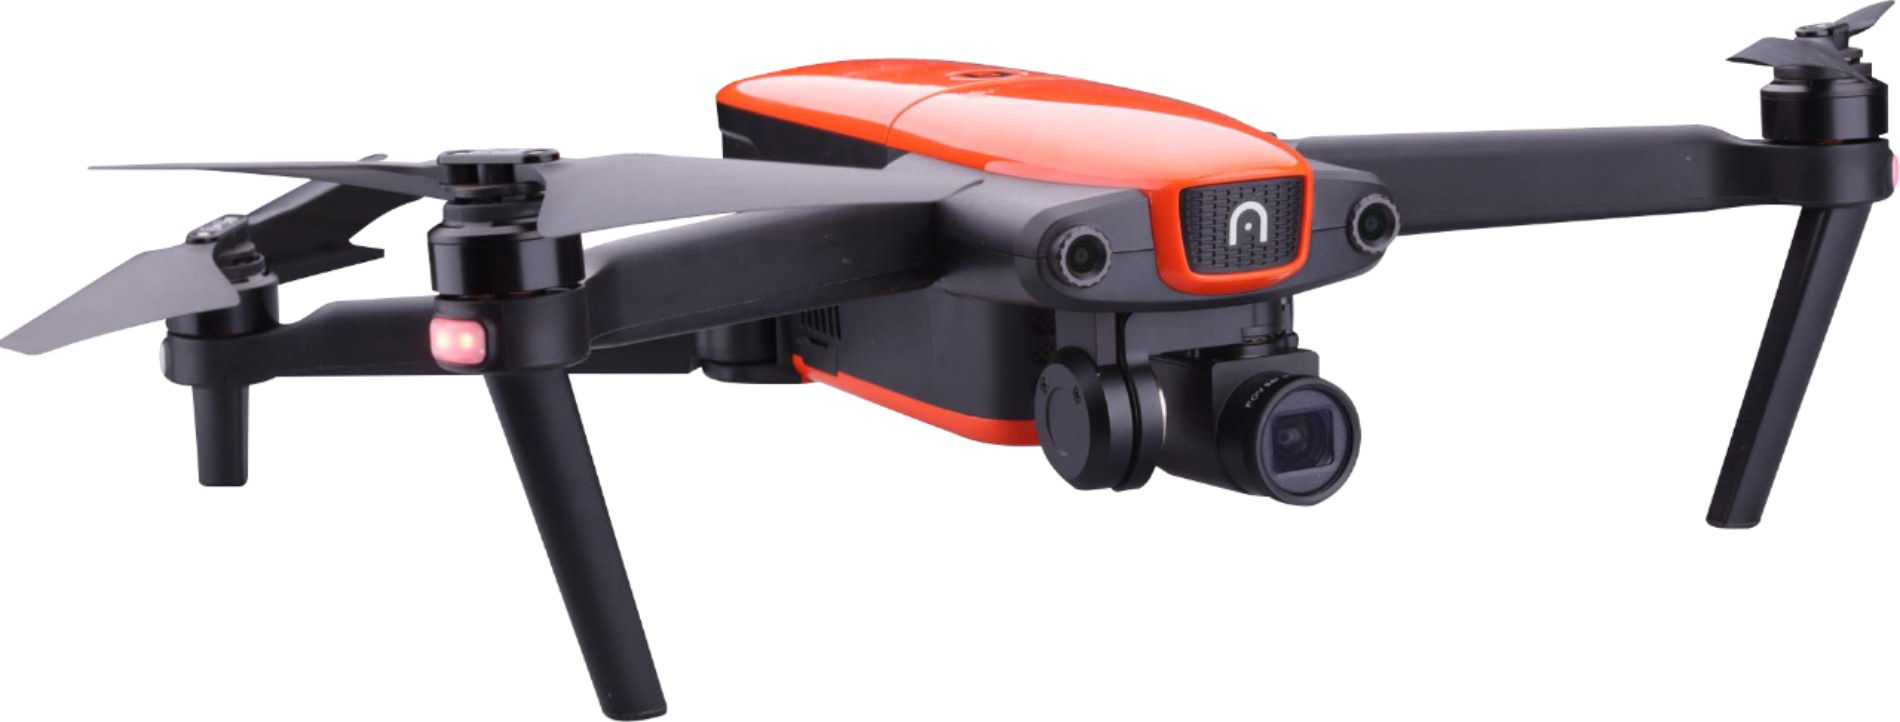 Angle View: Autel Robotics - EVO 4K Drone with Controller - Orange